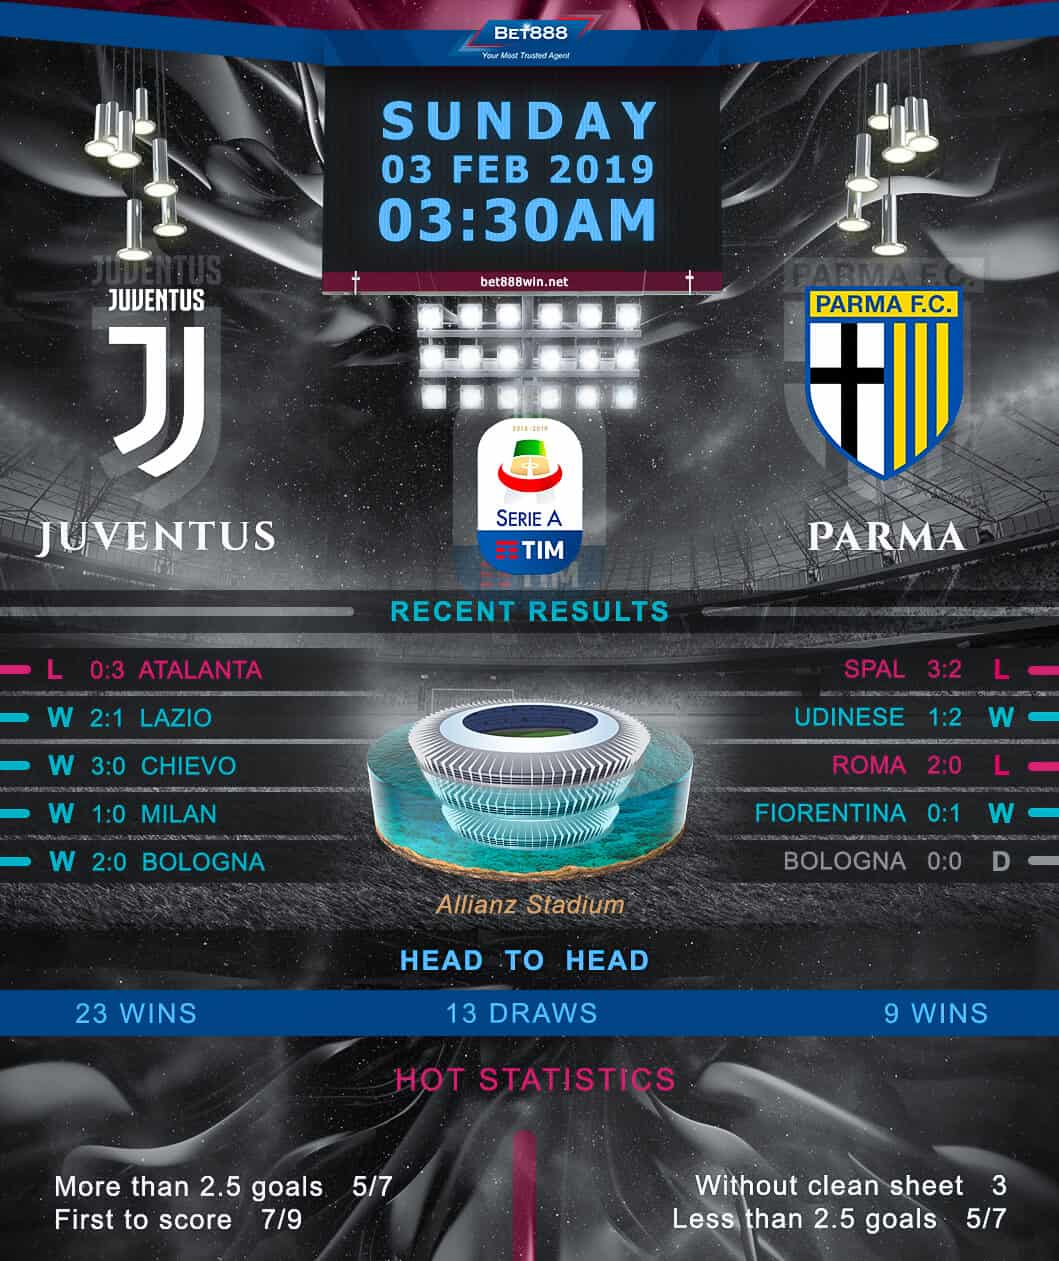 Juventus vs Parma﻿ 03/02/19